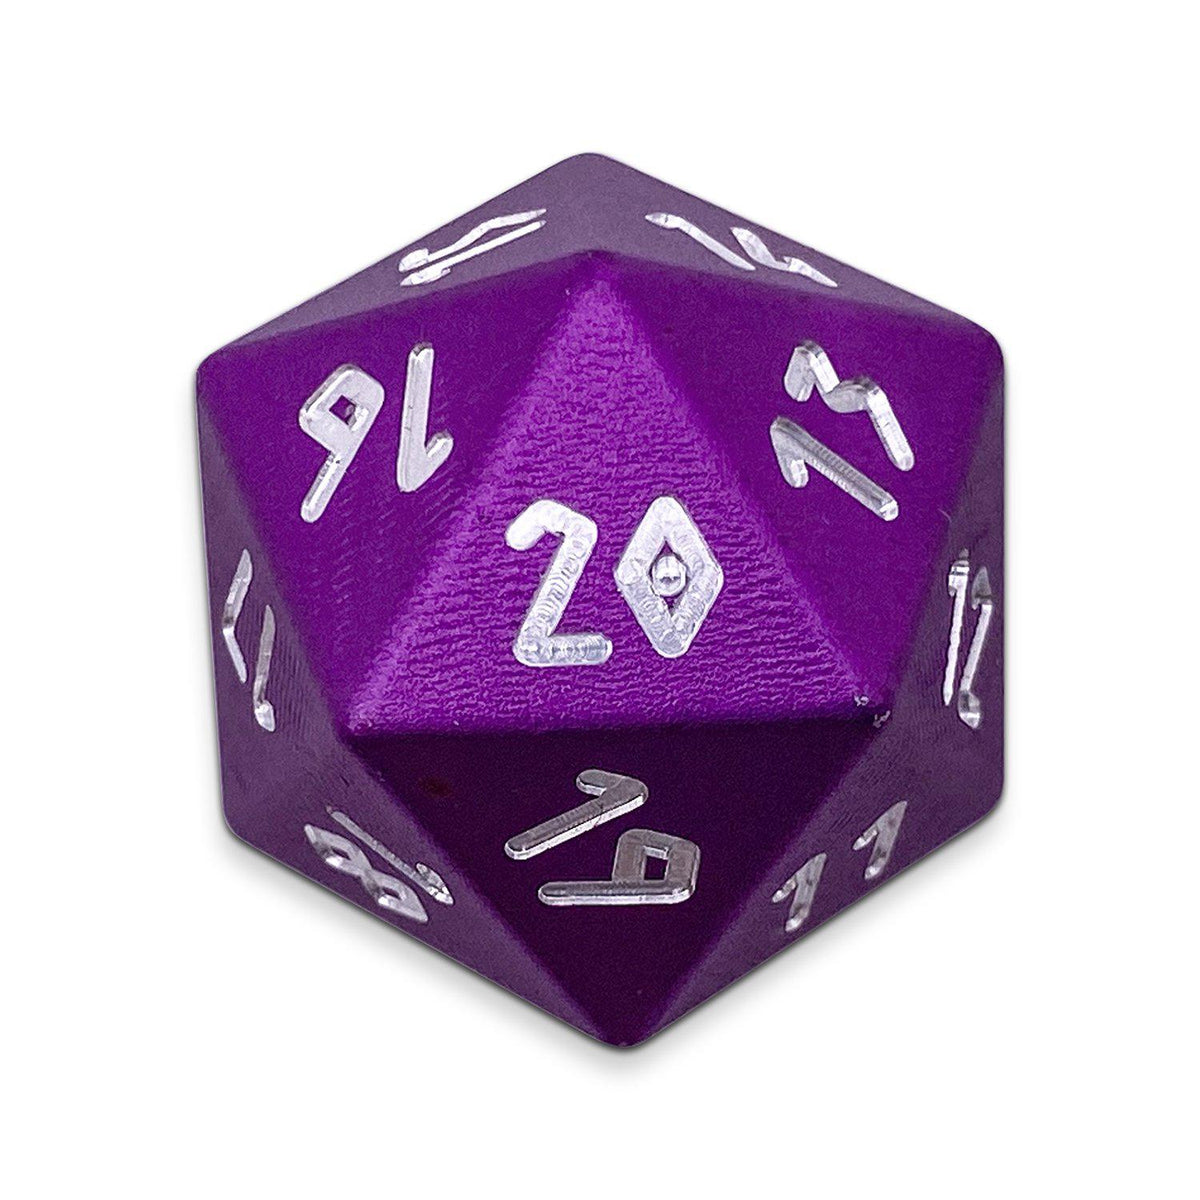 Lich Purple - Single D20 Count Down - Aluminum Dice - NOR 05205